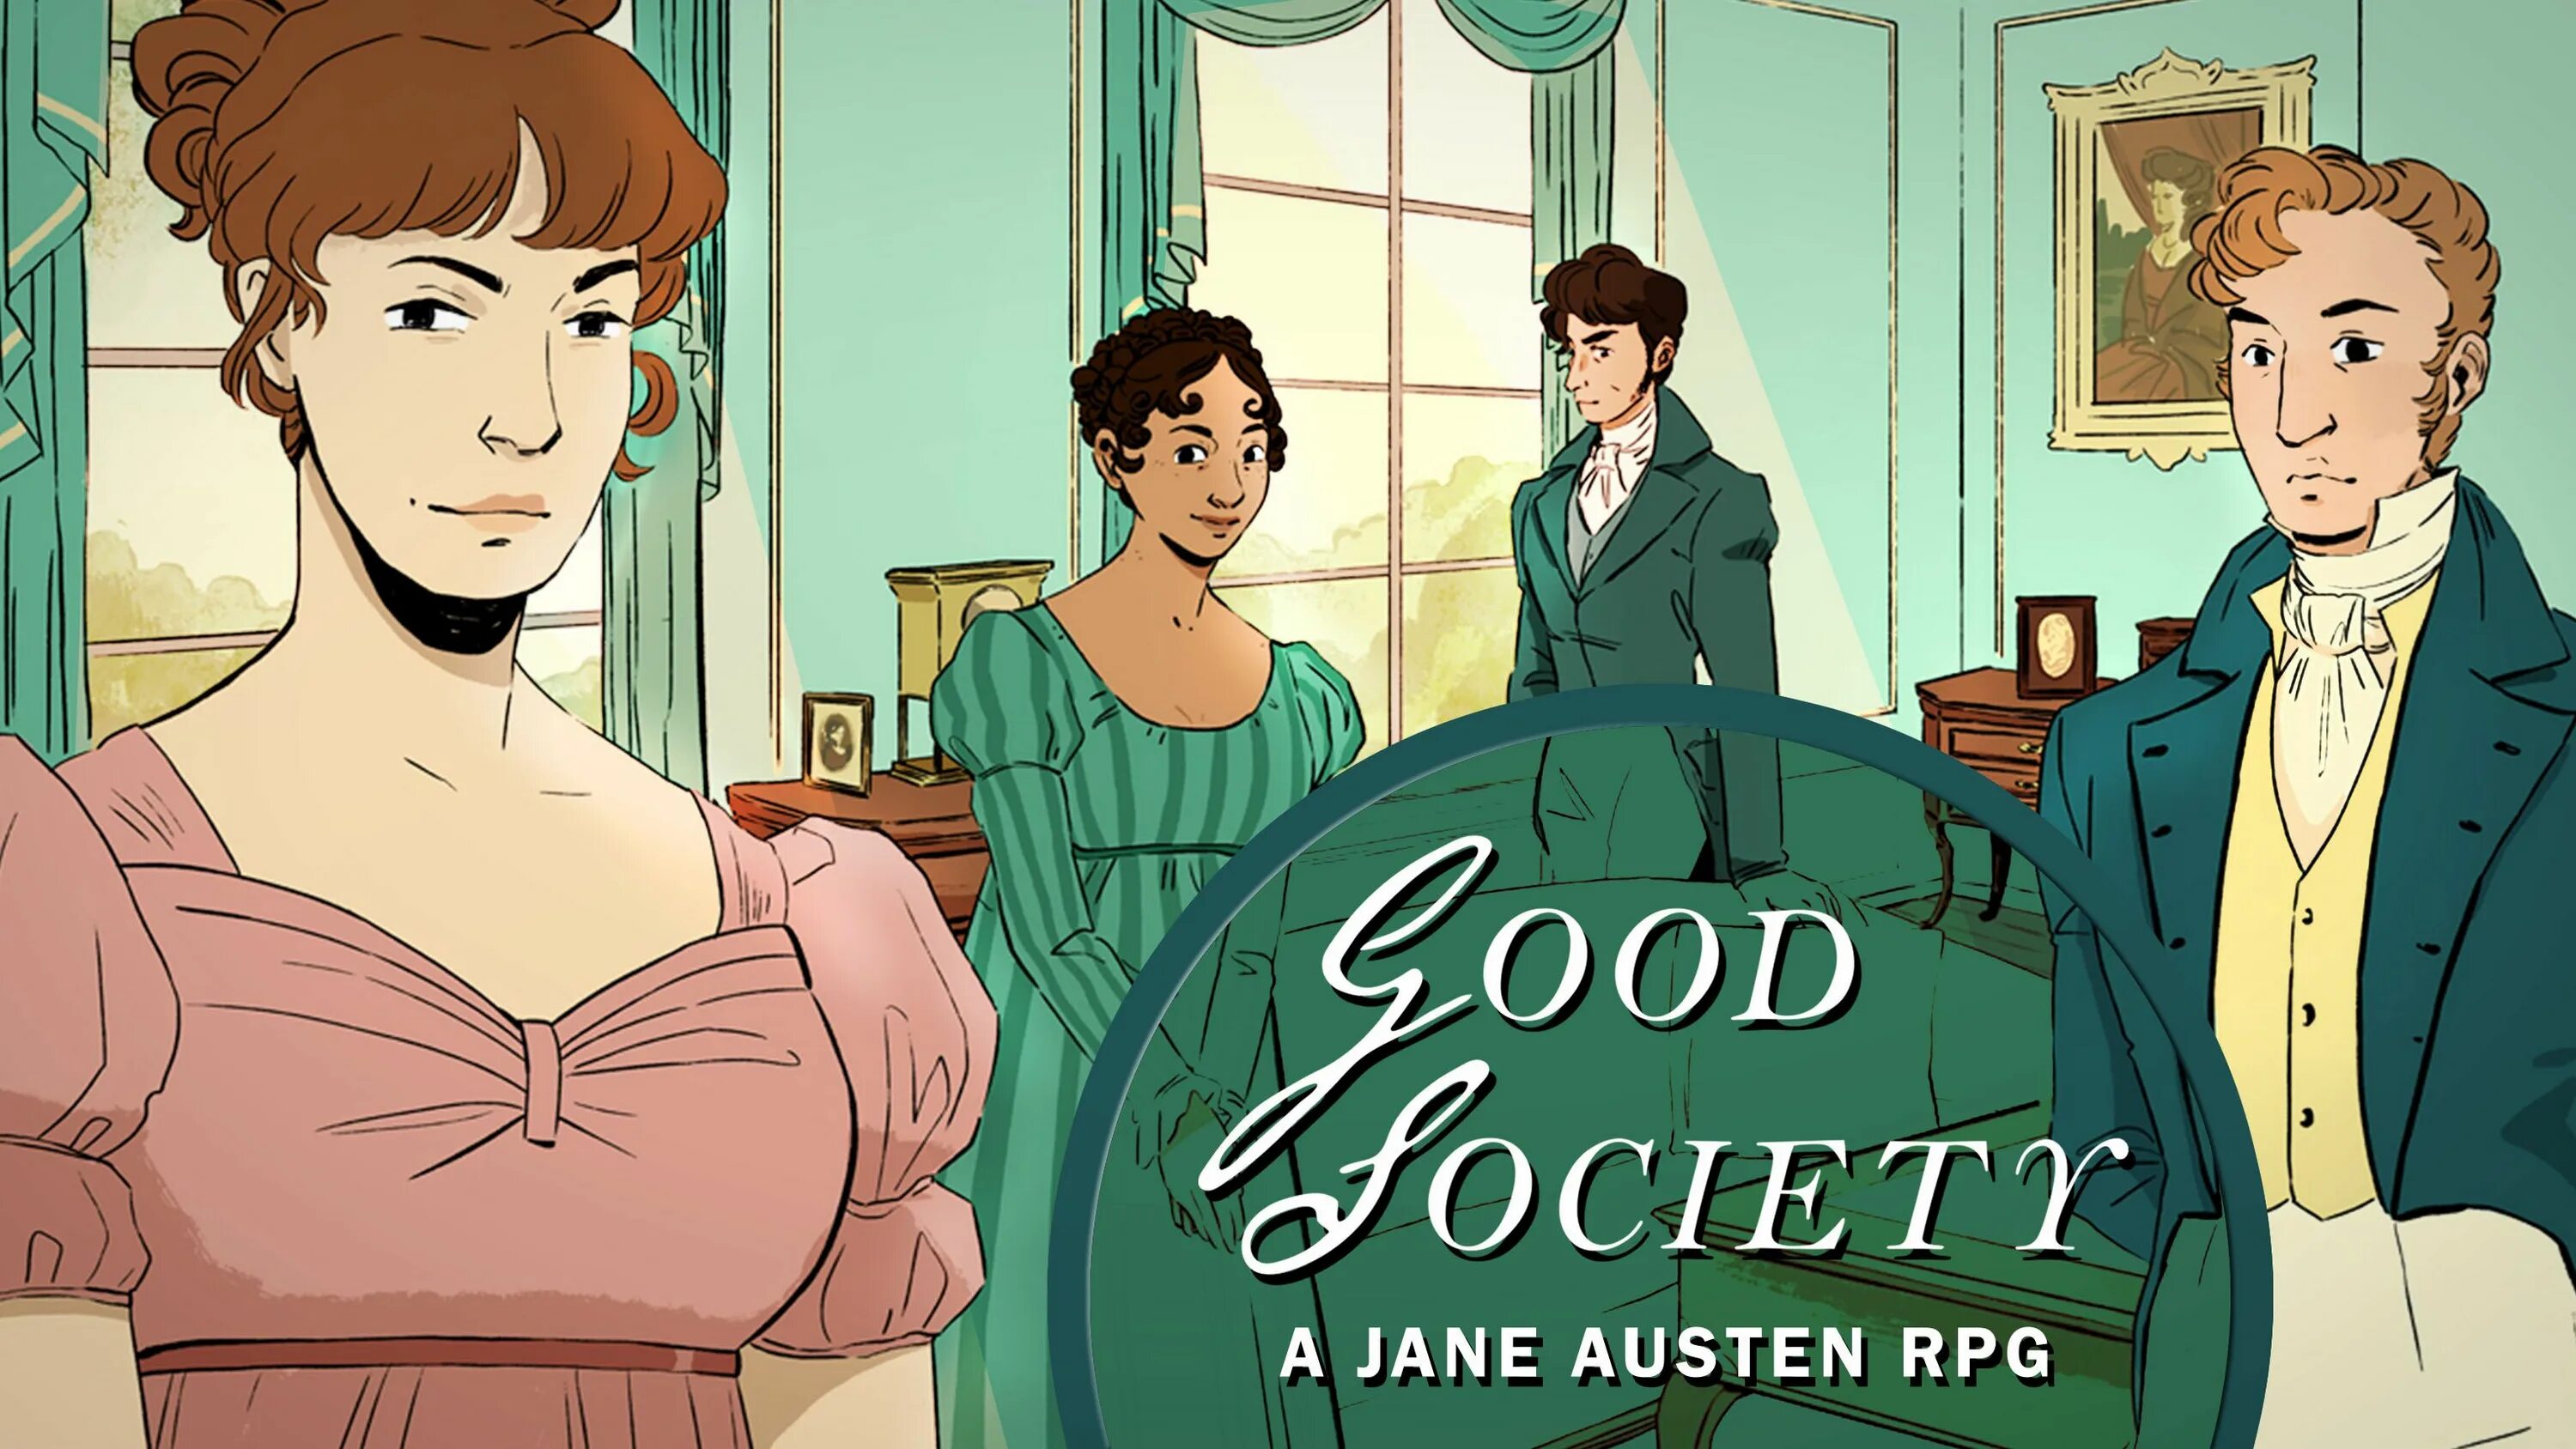 Good society. Jane Austen. Джейн Остин игра. Джейн Остин портрет. Гордость и предубеждение Джейн Остин книга.